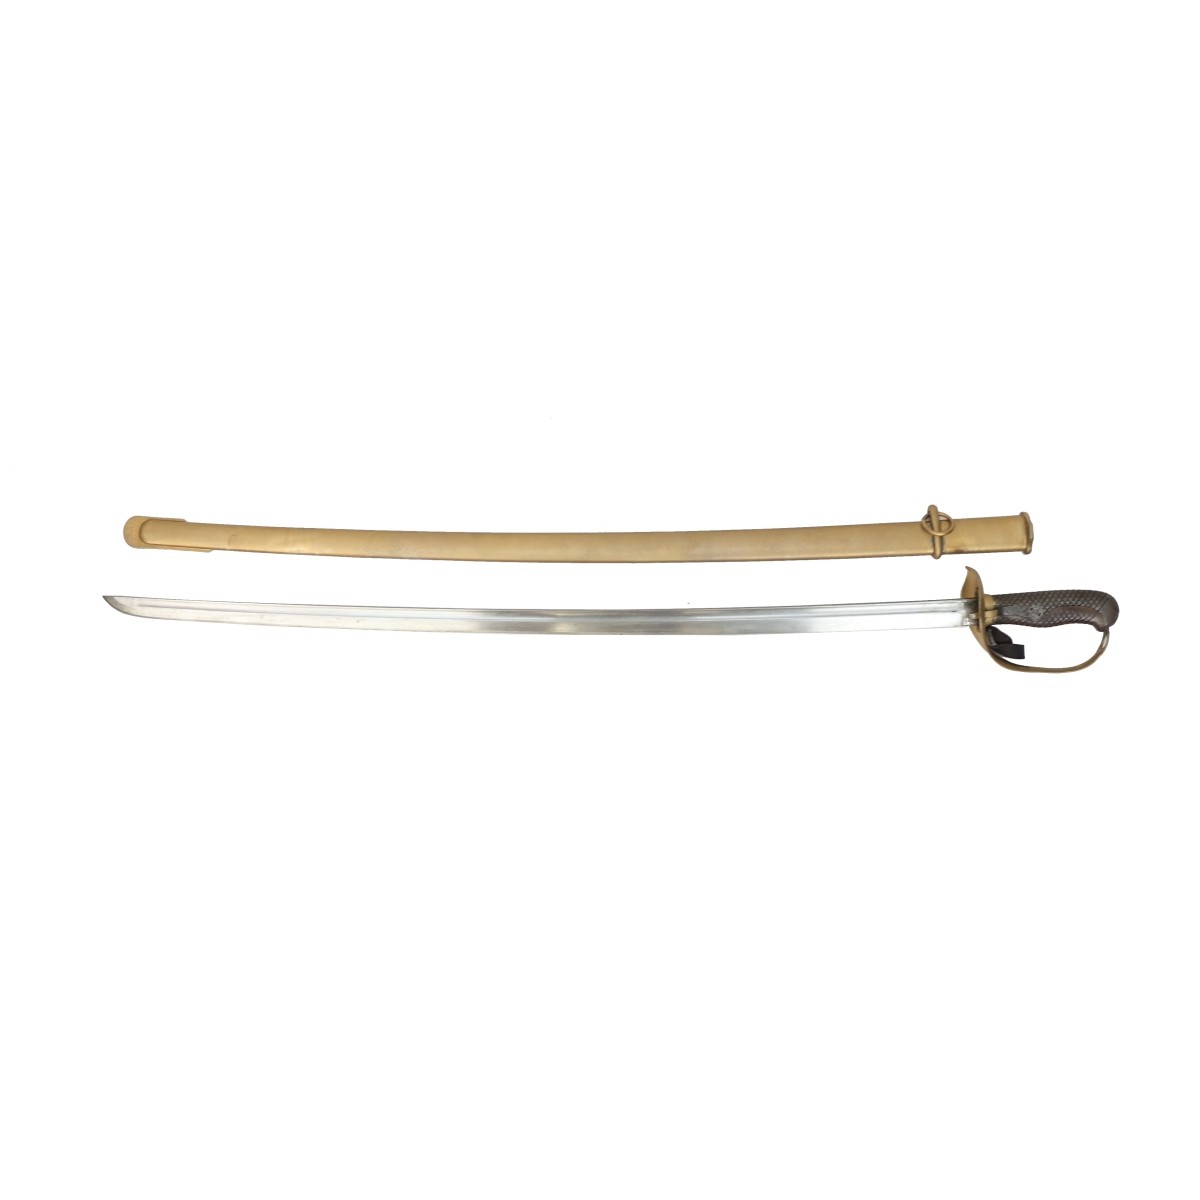 British Calvary Sword with Scabbard